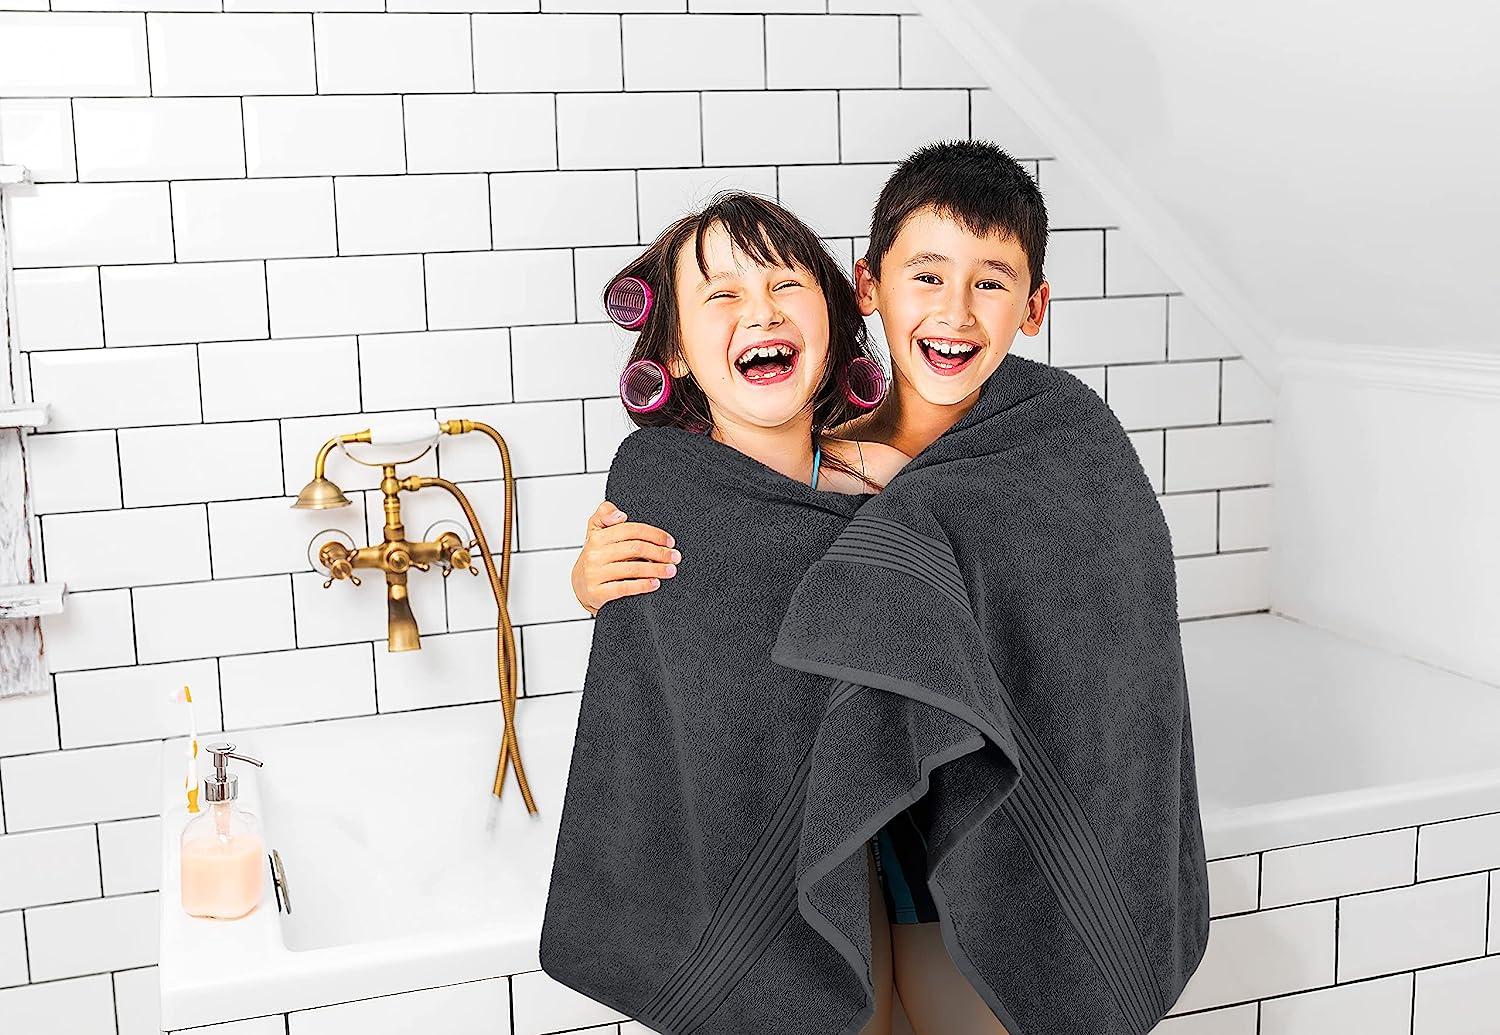 Jumbo Bath Sheets Towels For Adults 35 x 70 - 2-Pack - 100